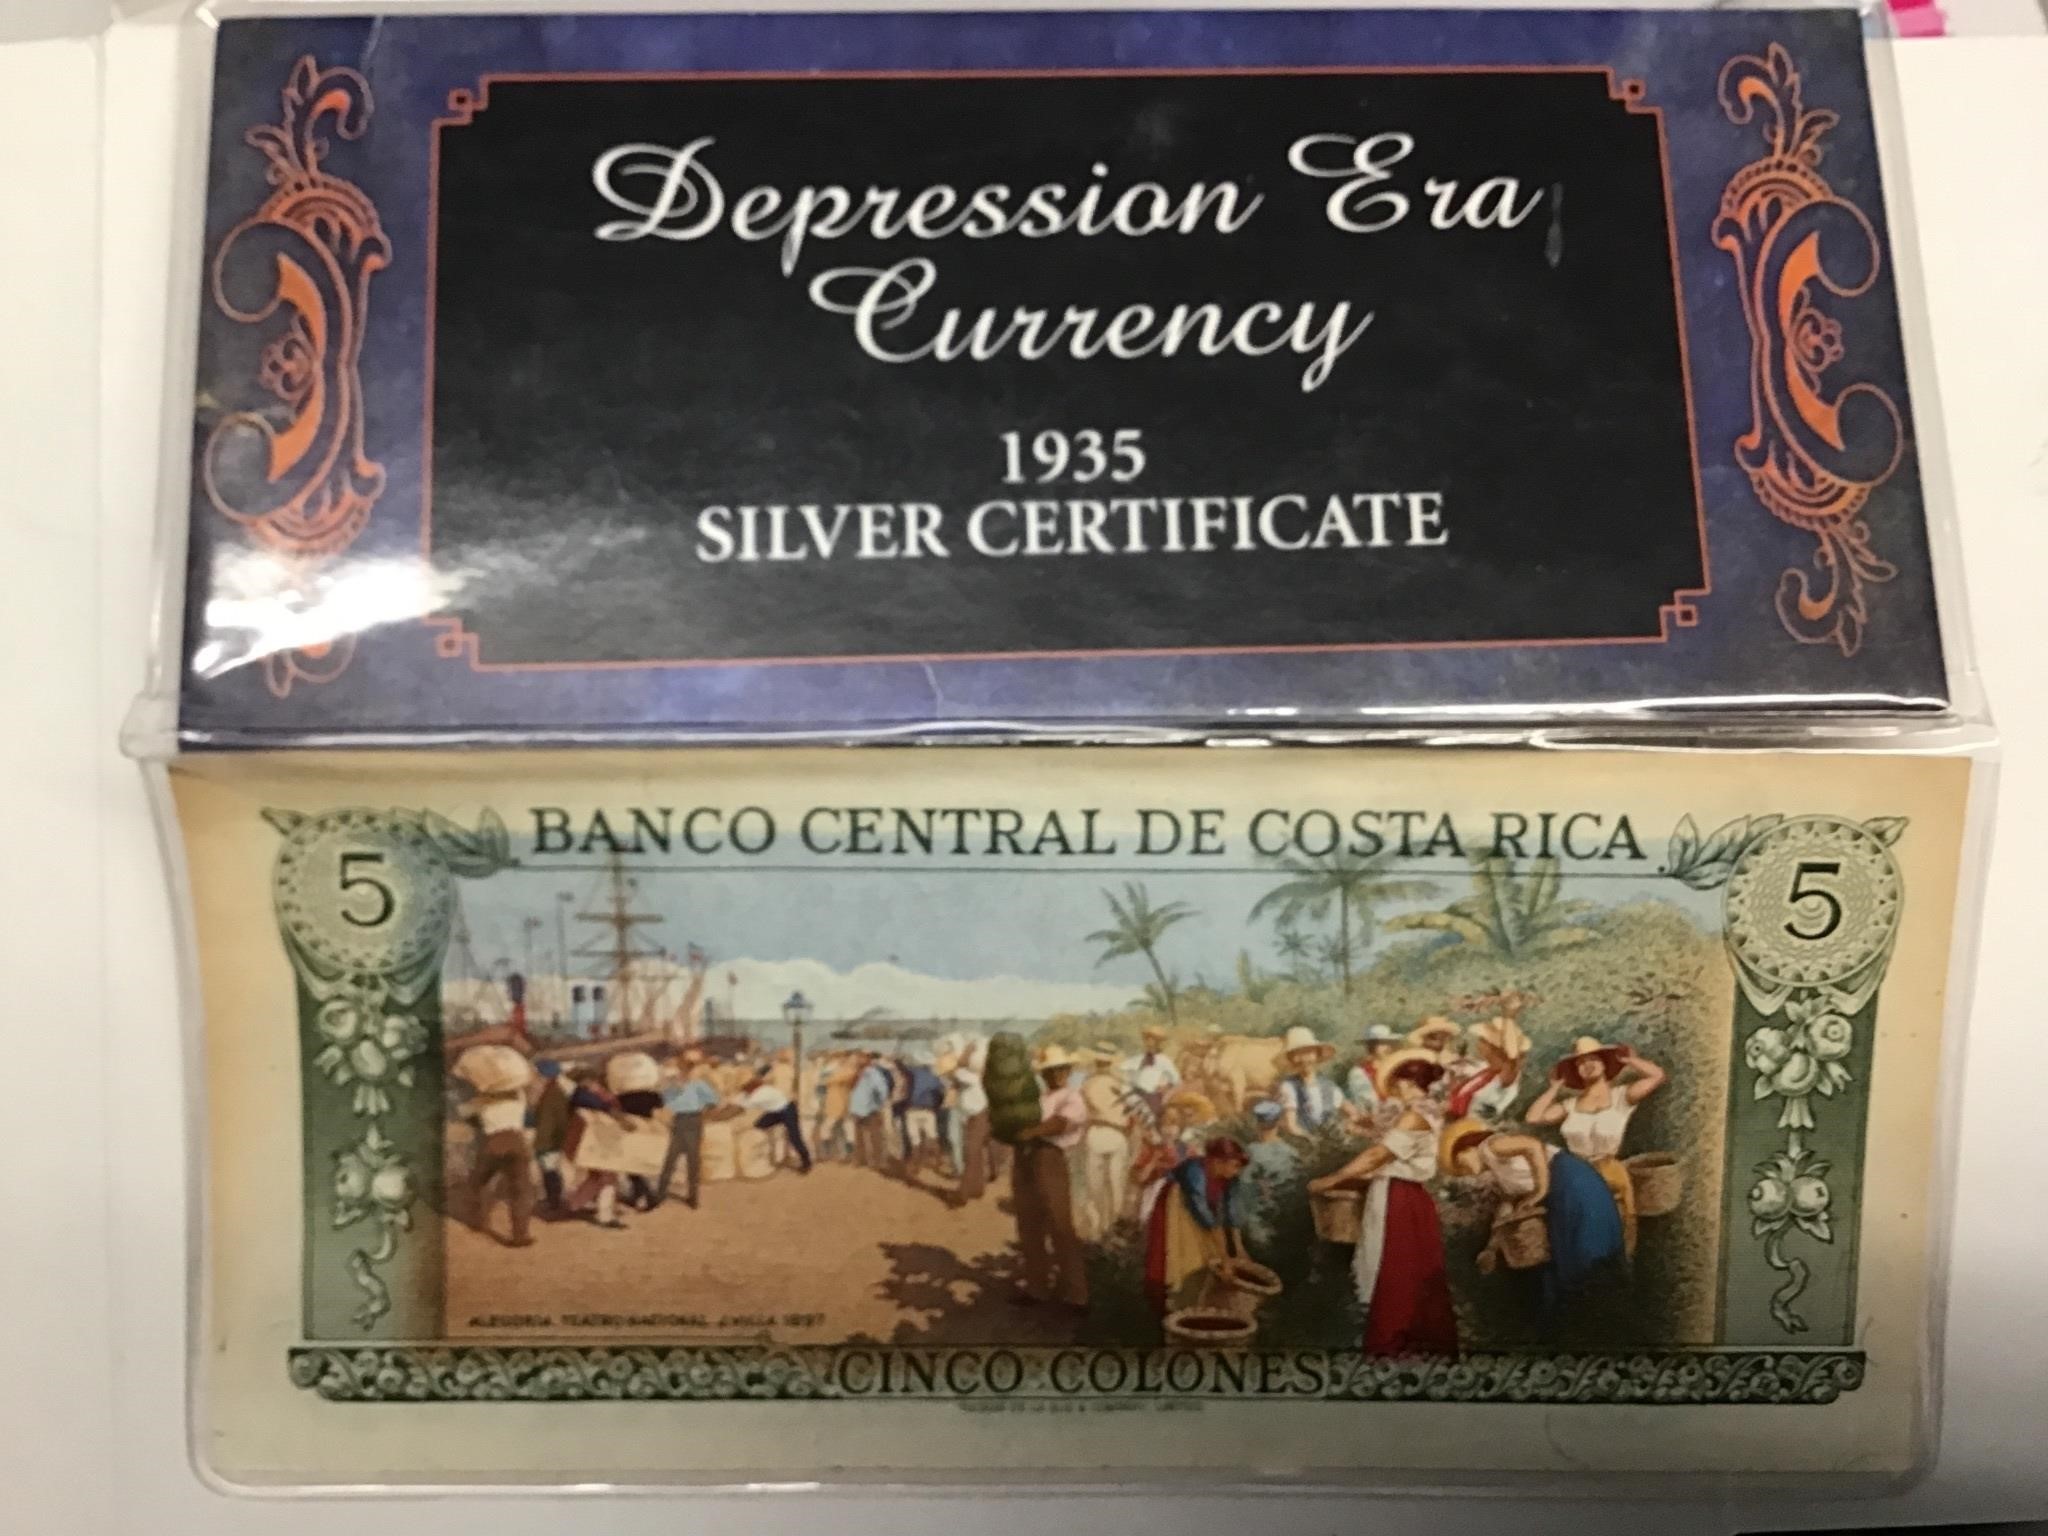 Depression era currency 1935 silver certificate $5